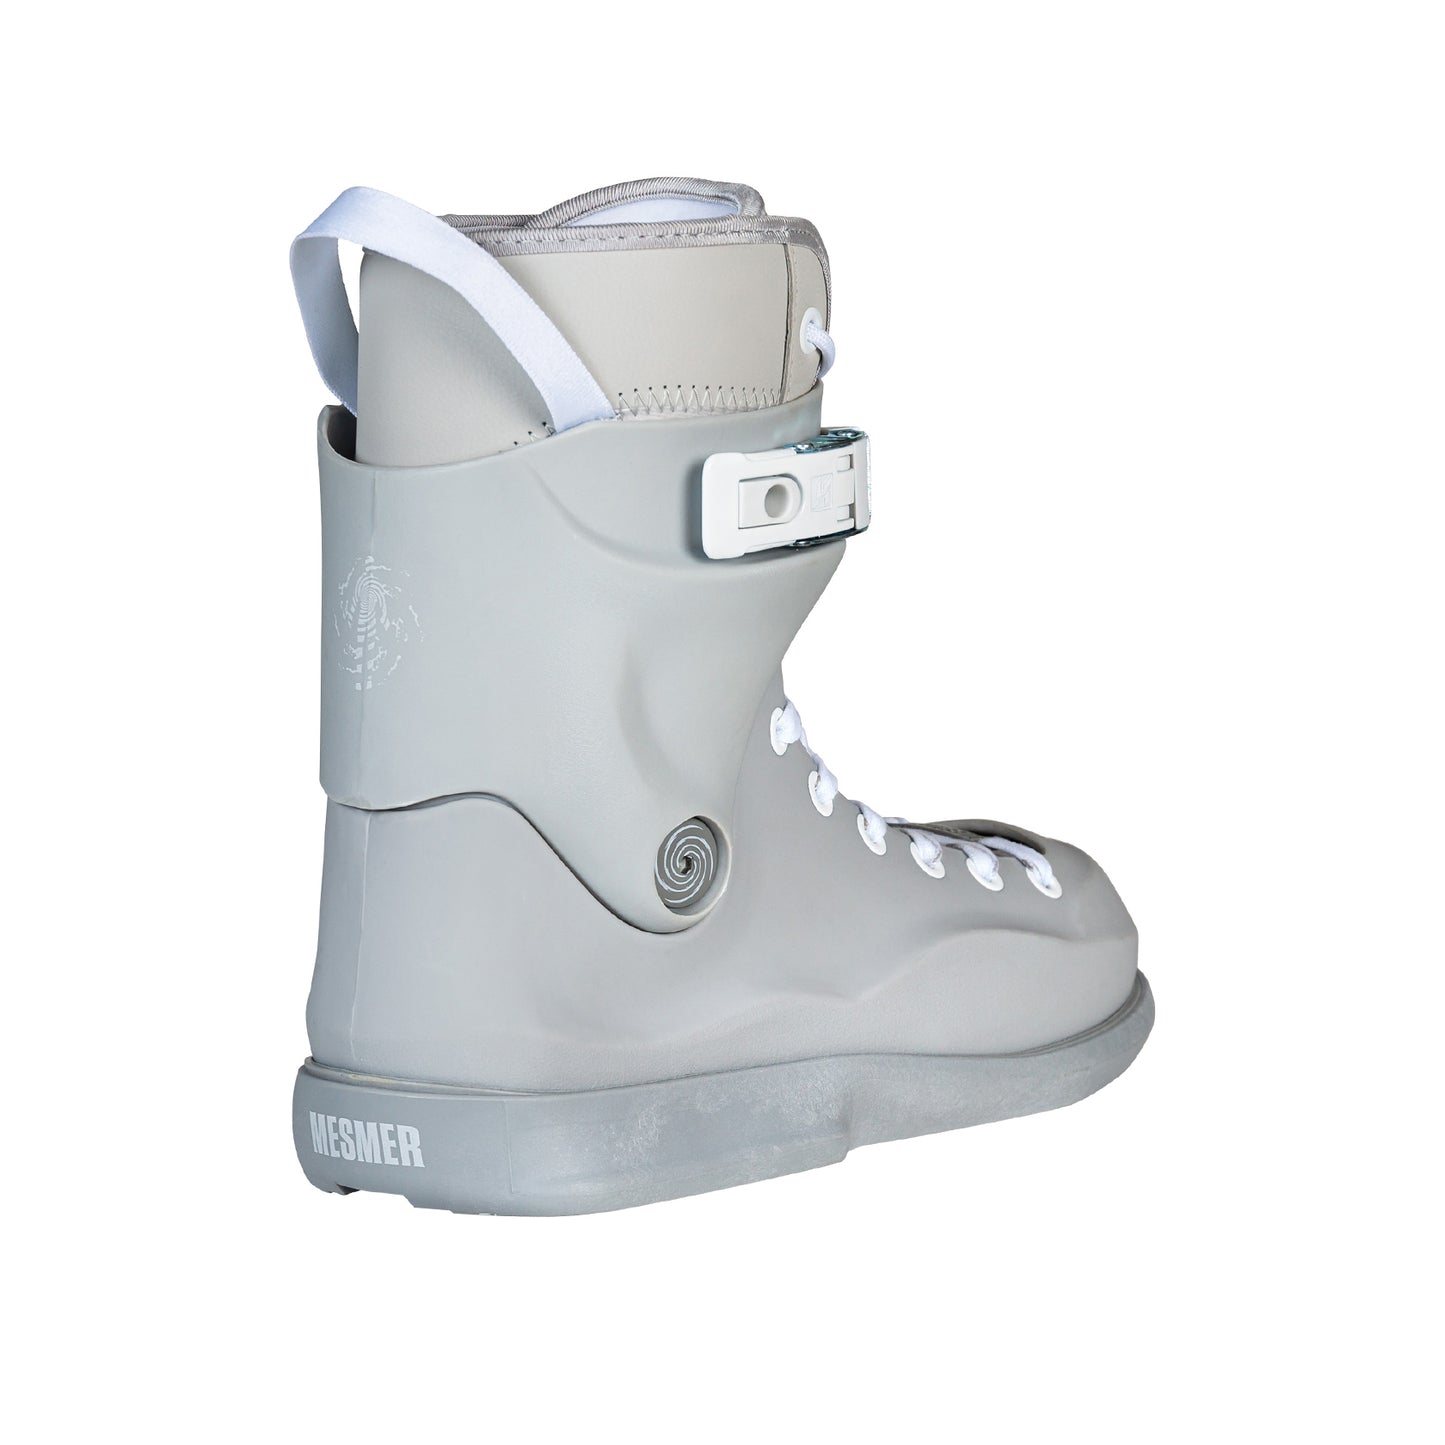 Team skate 2(TS2) - Boot only